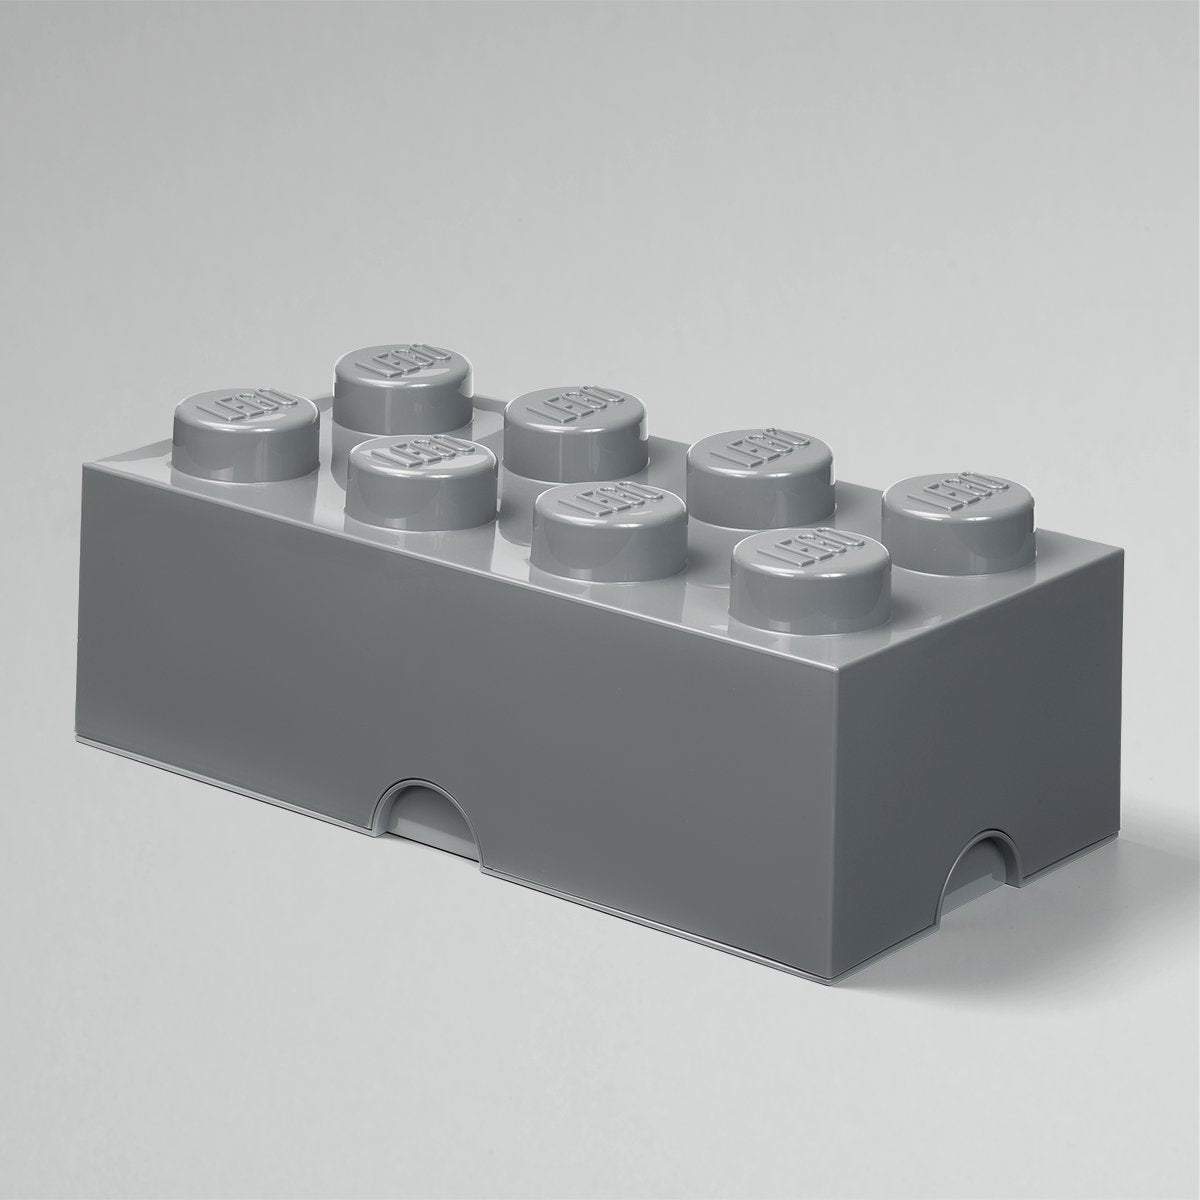 Caja XXL Lego® - Bloque de 8 - Colores clásicos - Casa de Fieras